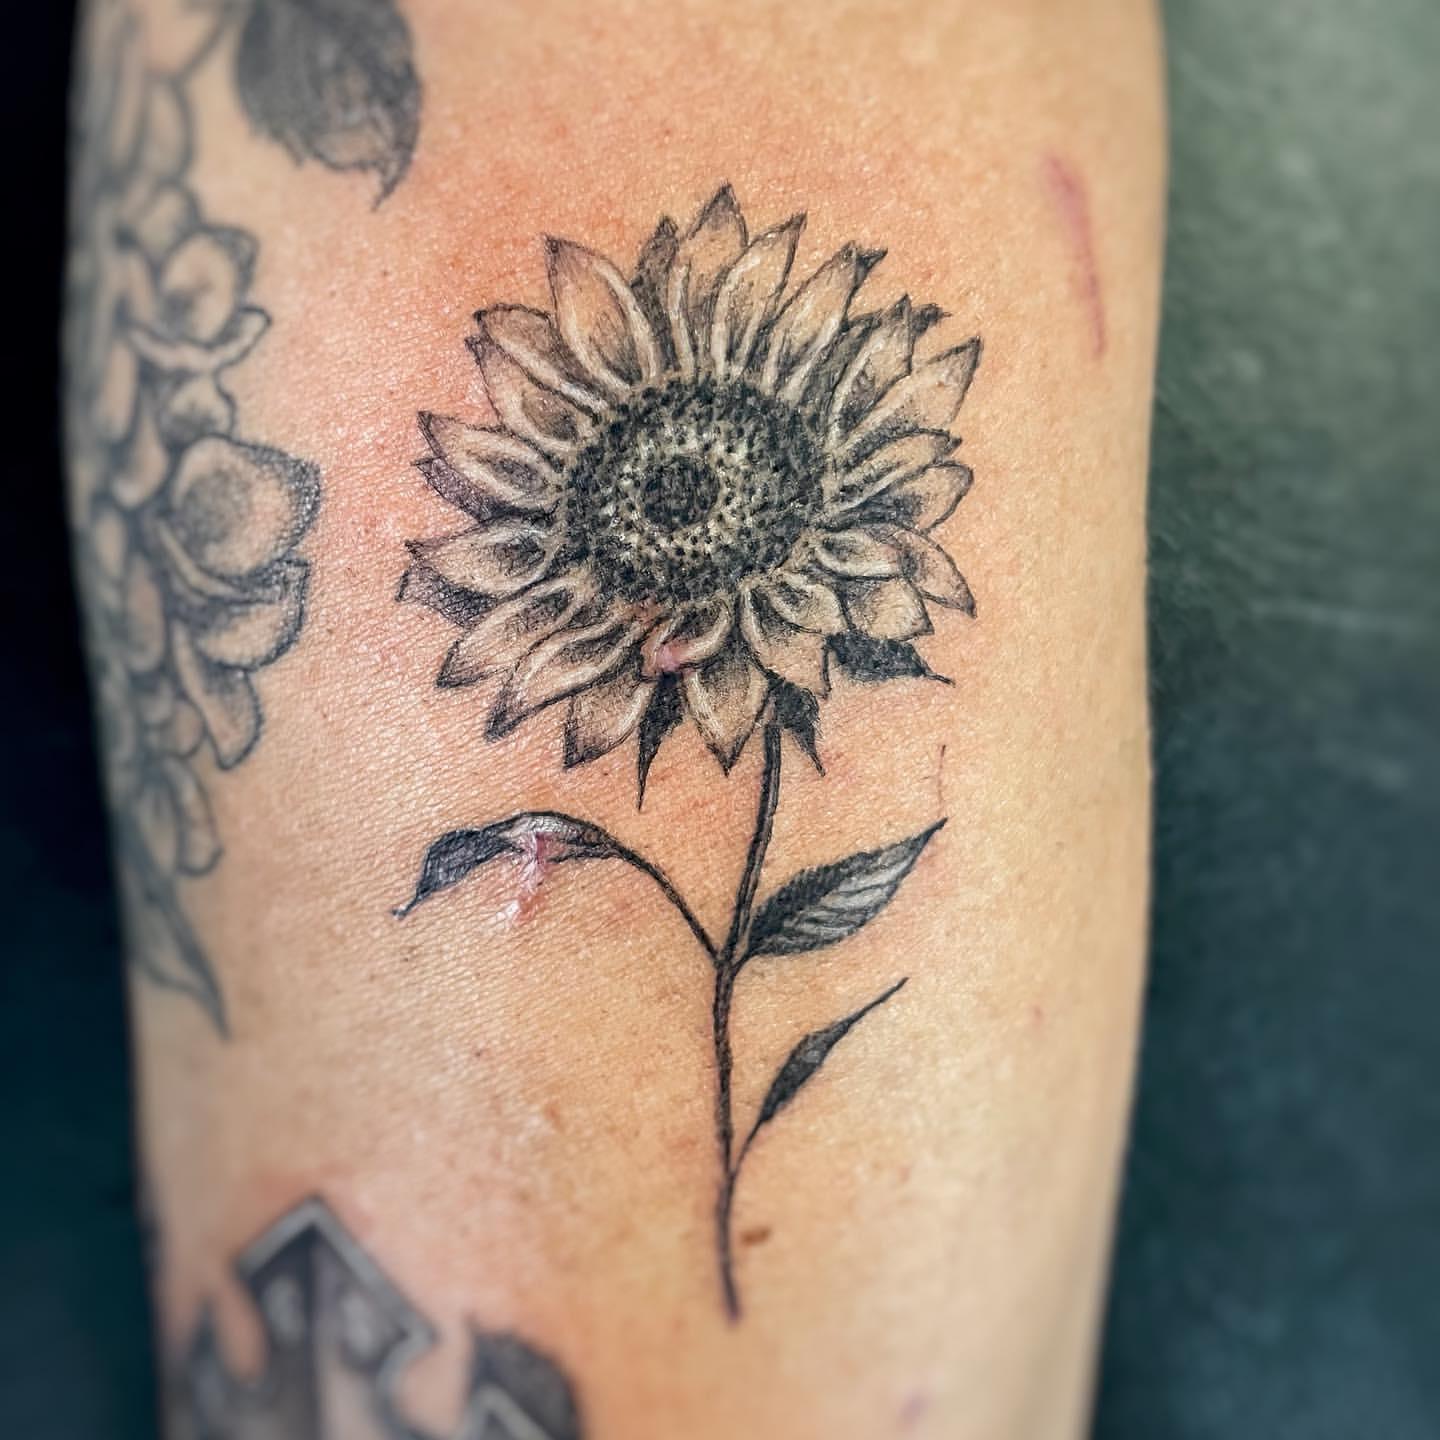 Flower Tattoo Ideas, Sunflower Tattoo